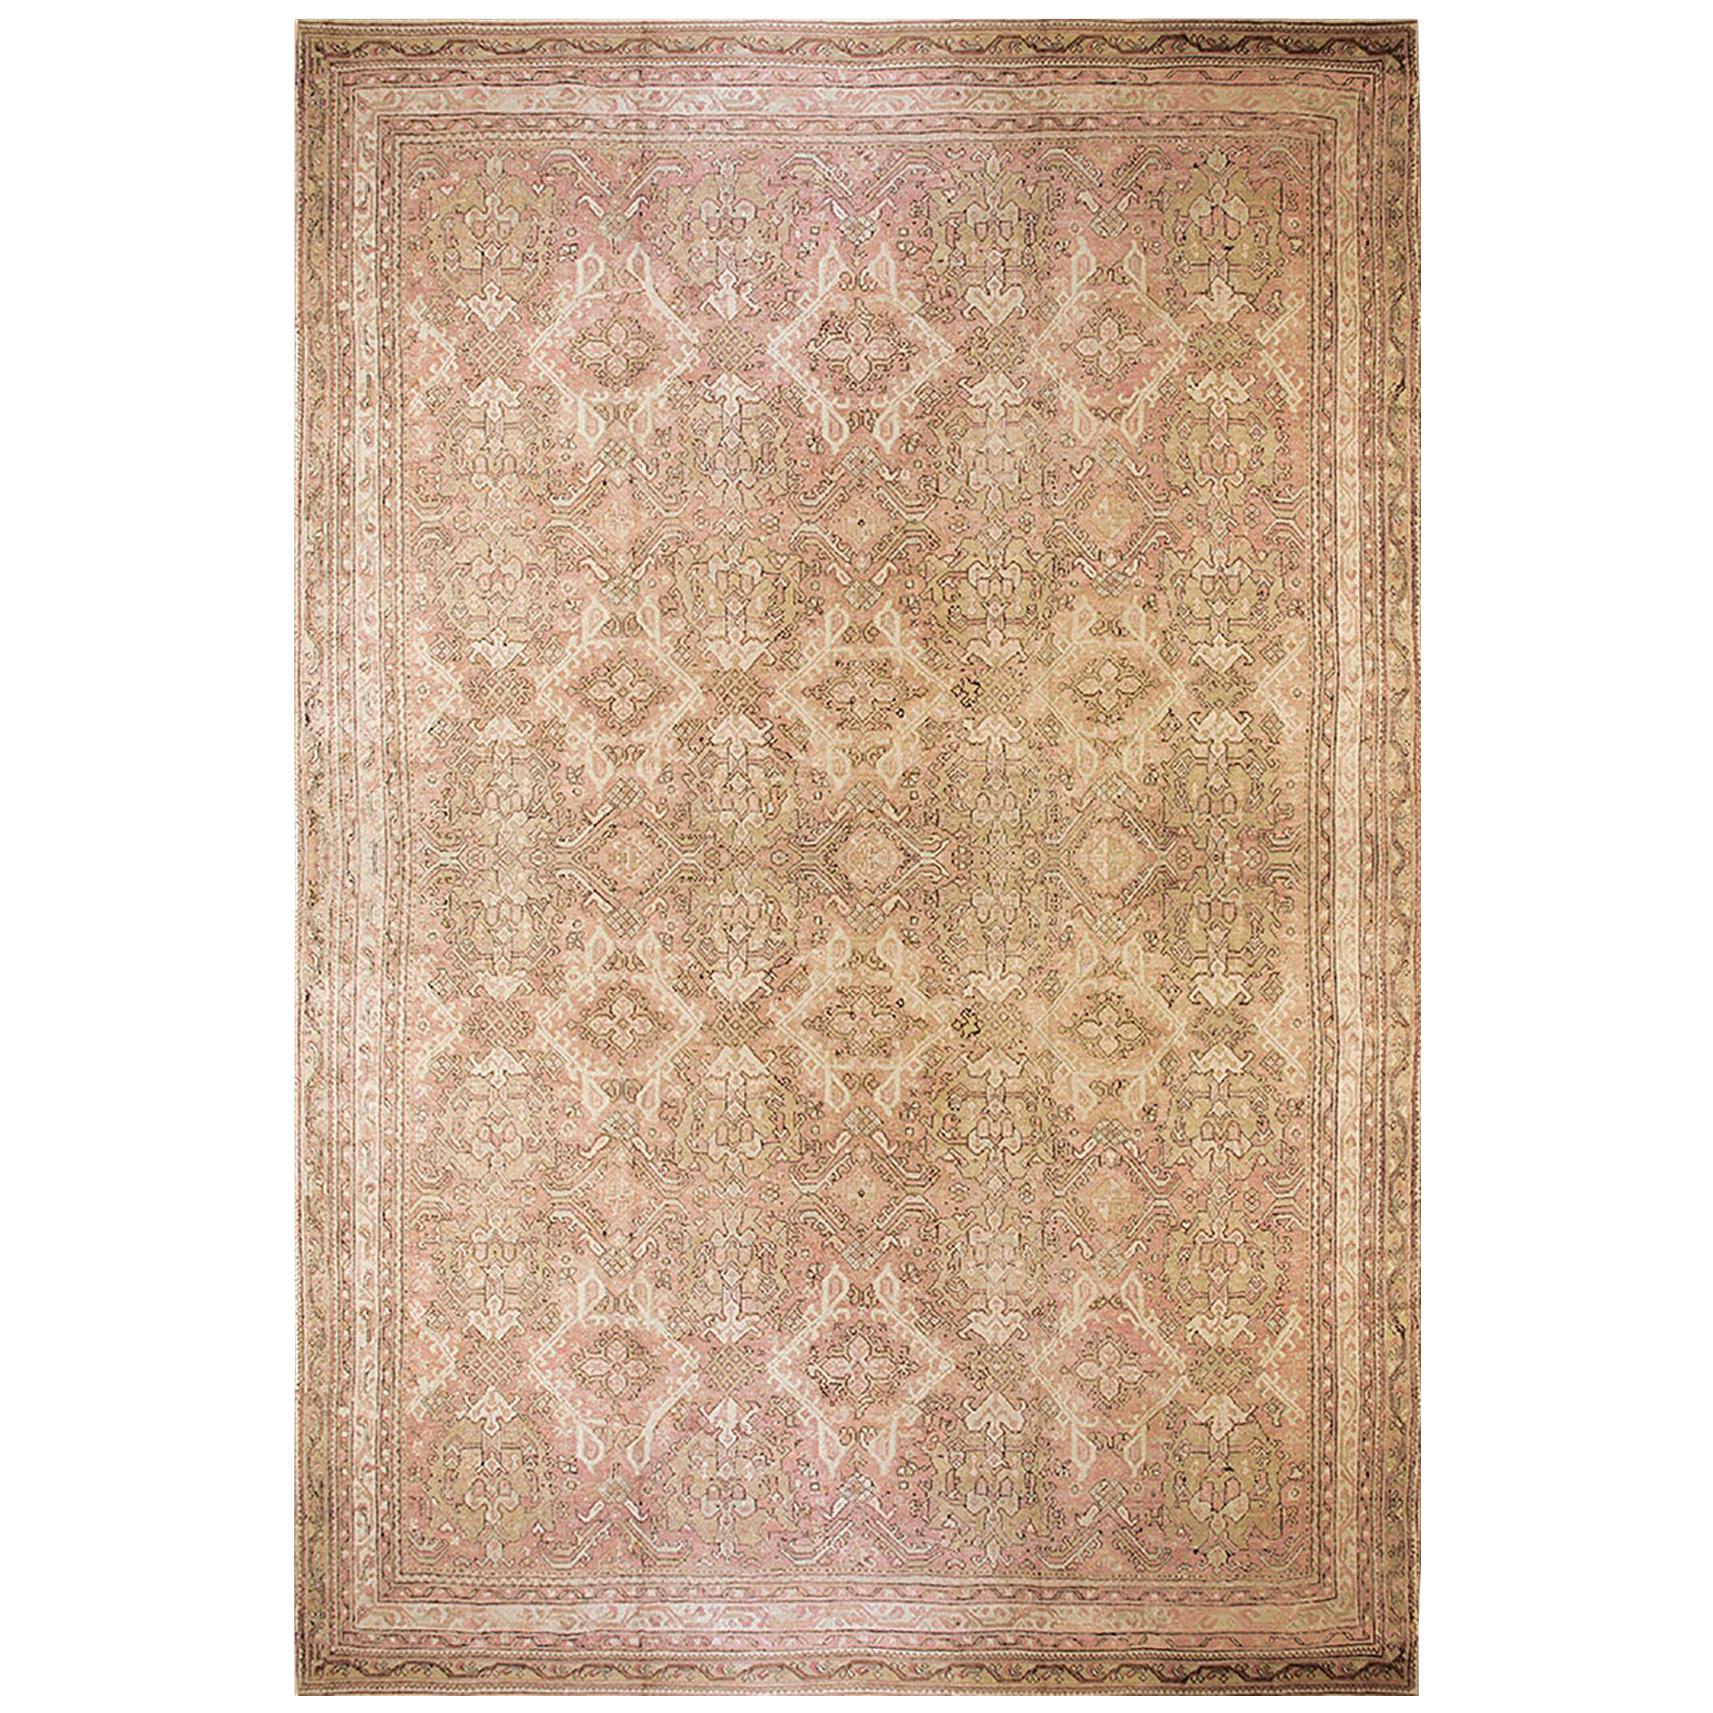 19th Century " Smyrna " Oushak Carpet ( 15'6'" x 23'6" - 472 x 716 ) For Sale